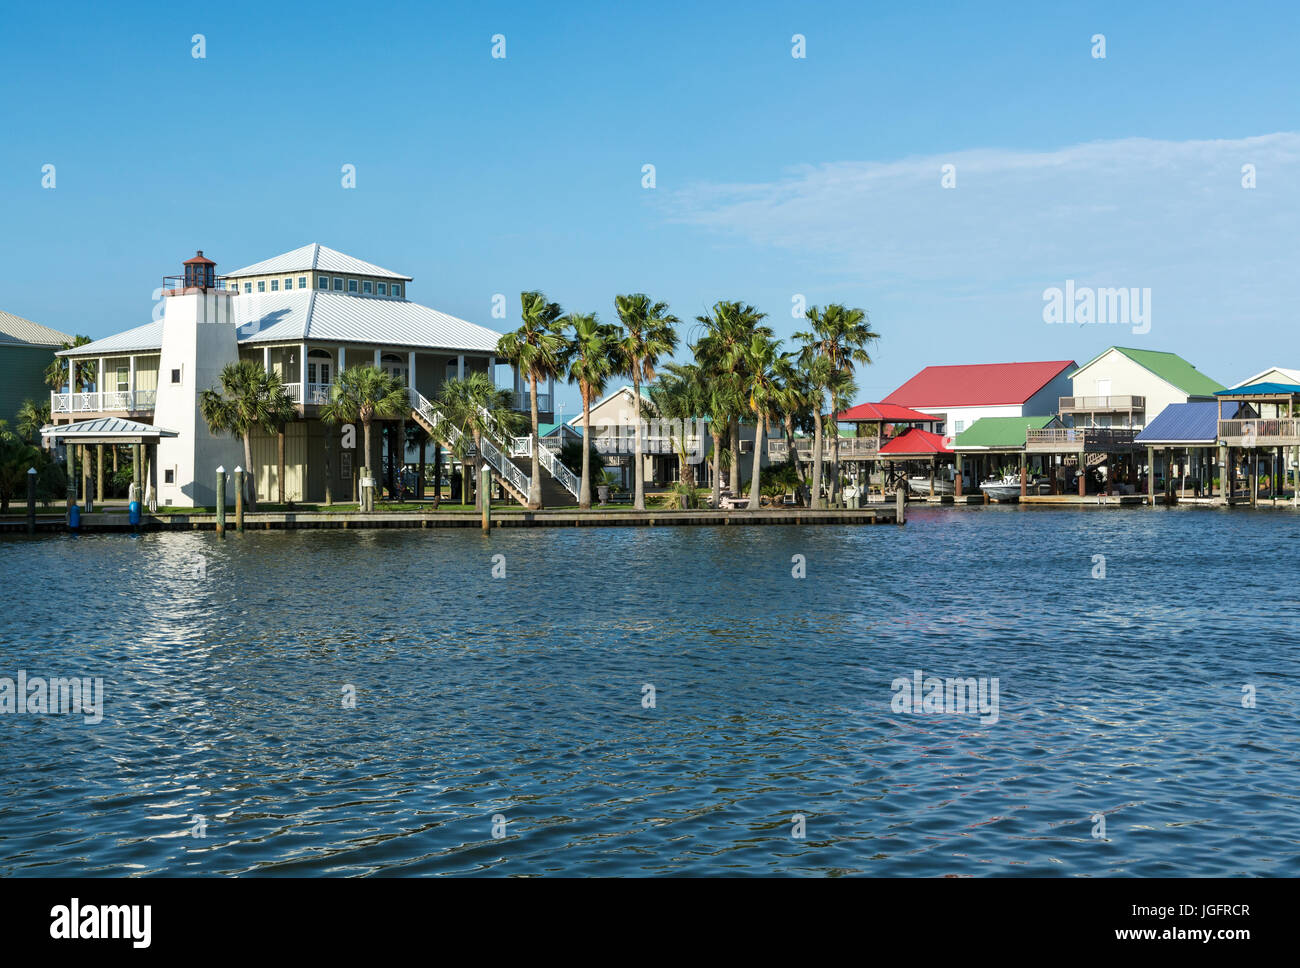 Louisiana, Lafourche Parish, Port Fourchon, Pointe Fourchon, waterfront residential community Stock Photo